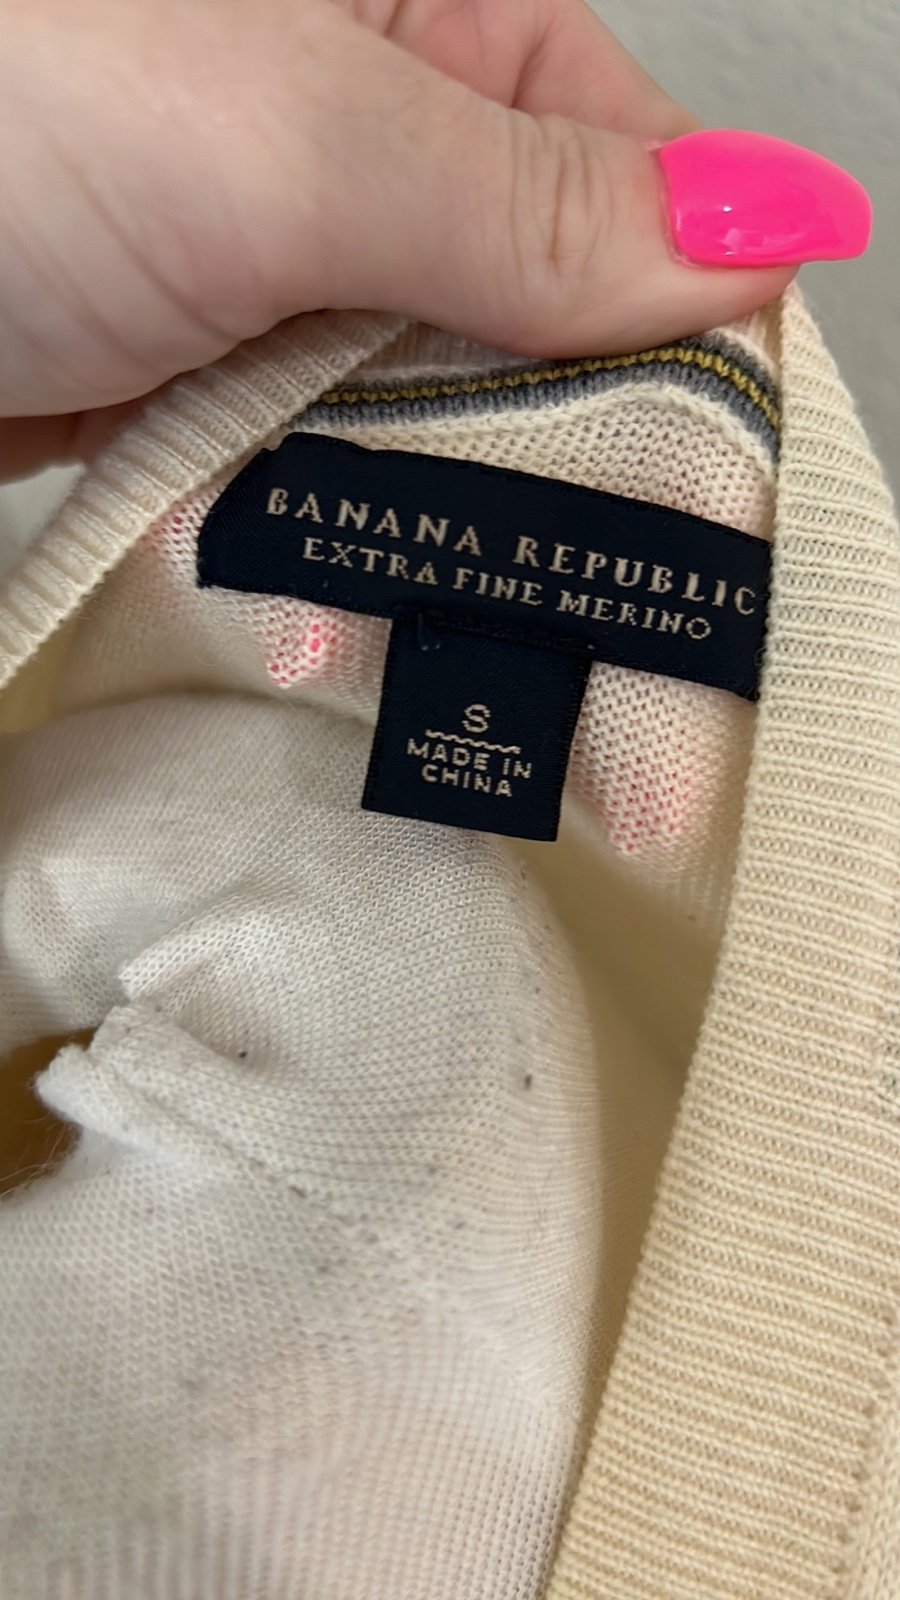 High quality Banana Republic merino wool sweater lCekZcGA6 just for you